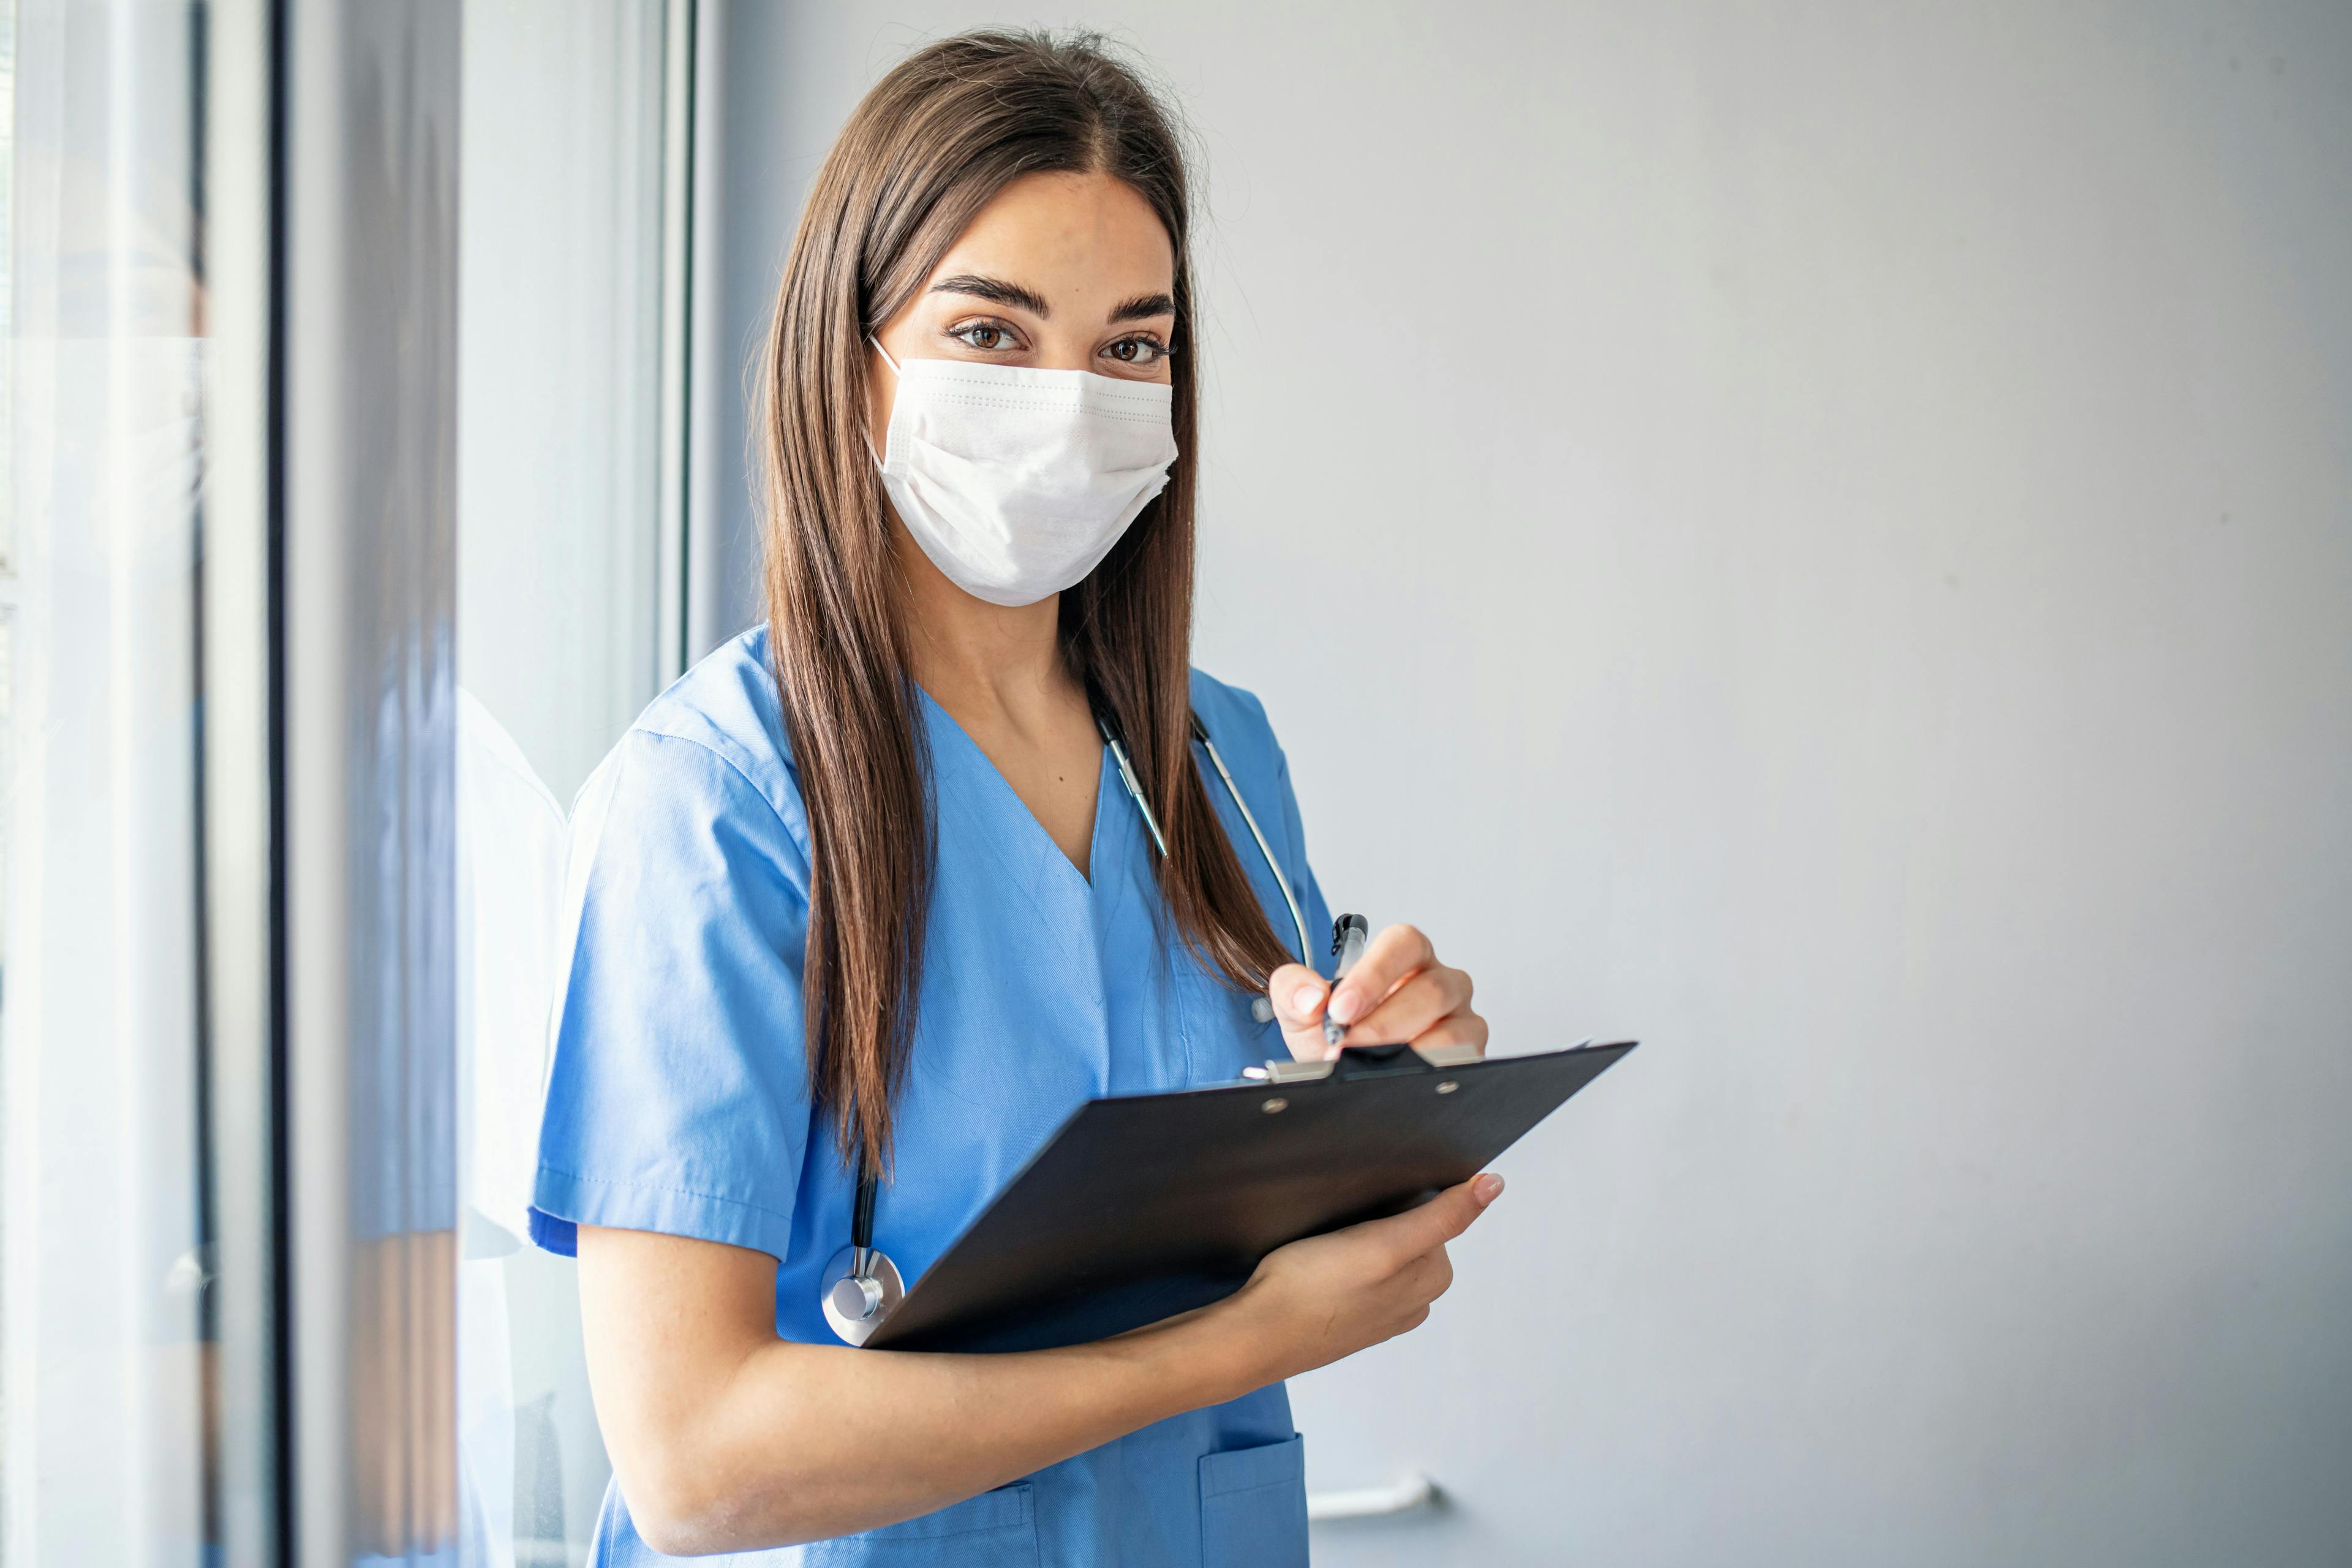 Nurses back legislation to set minimum staffing levels | Bills and Laws